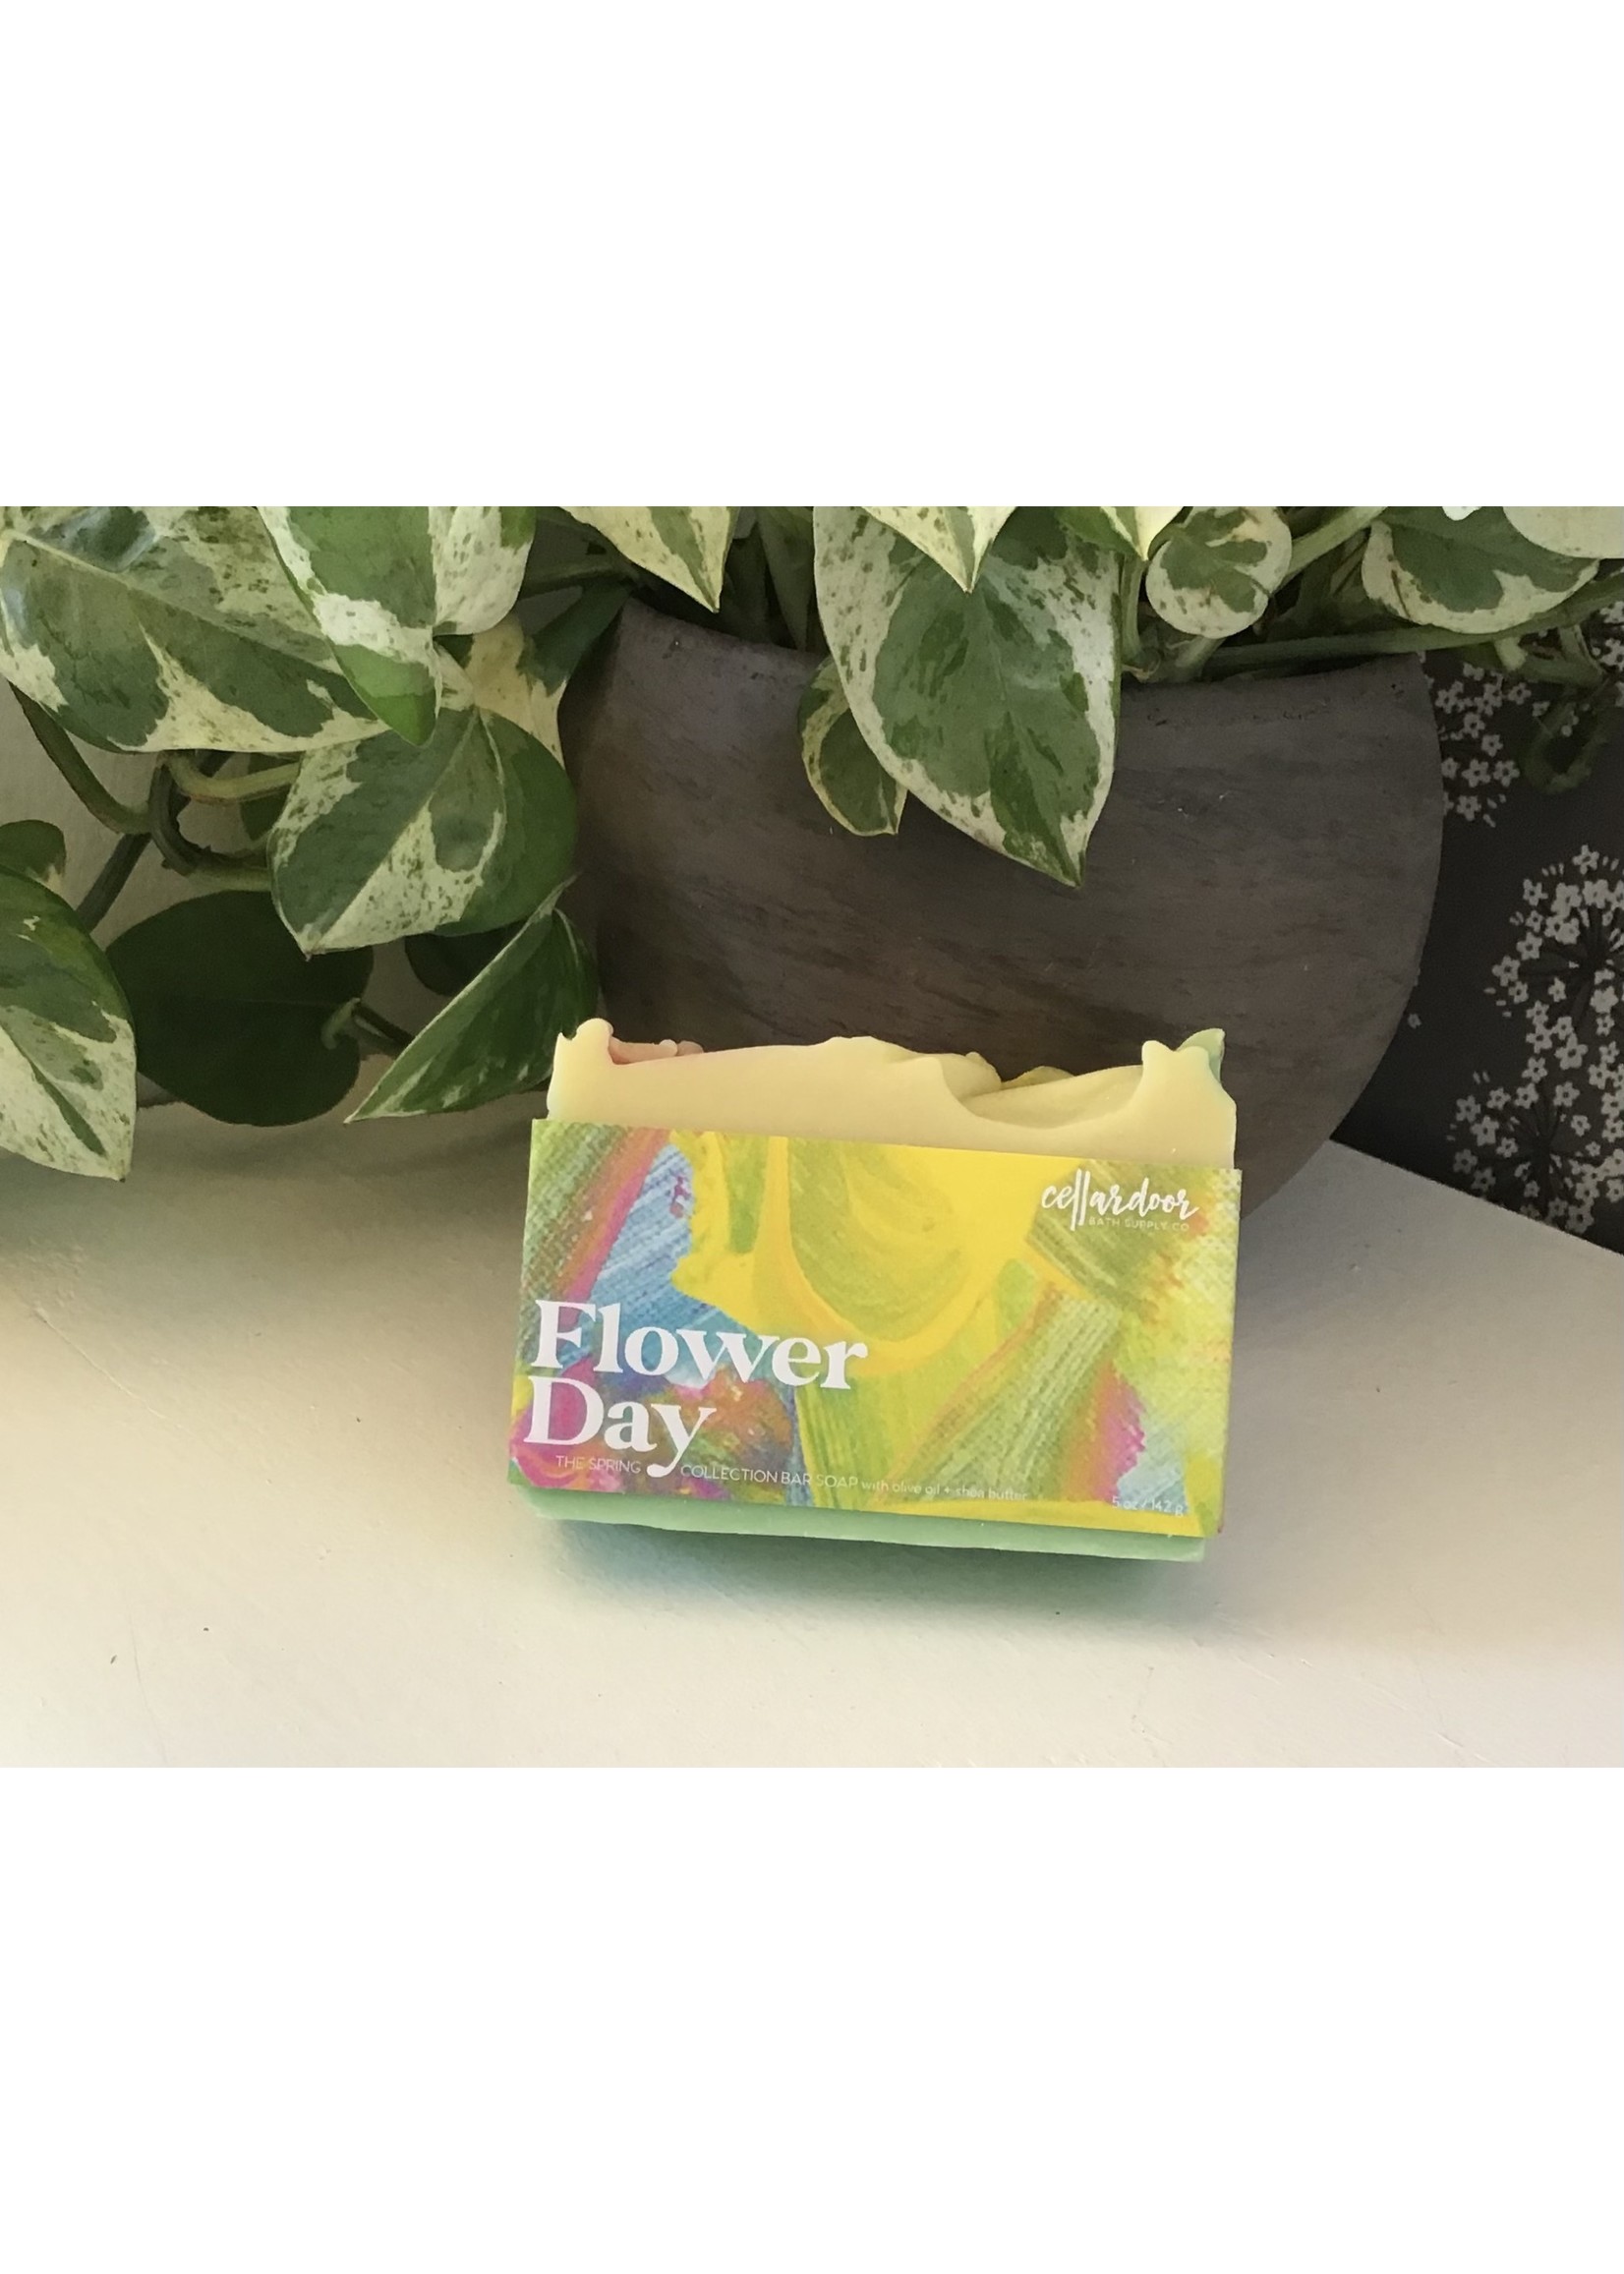 Flower Day Soap